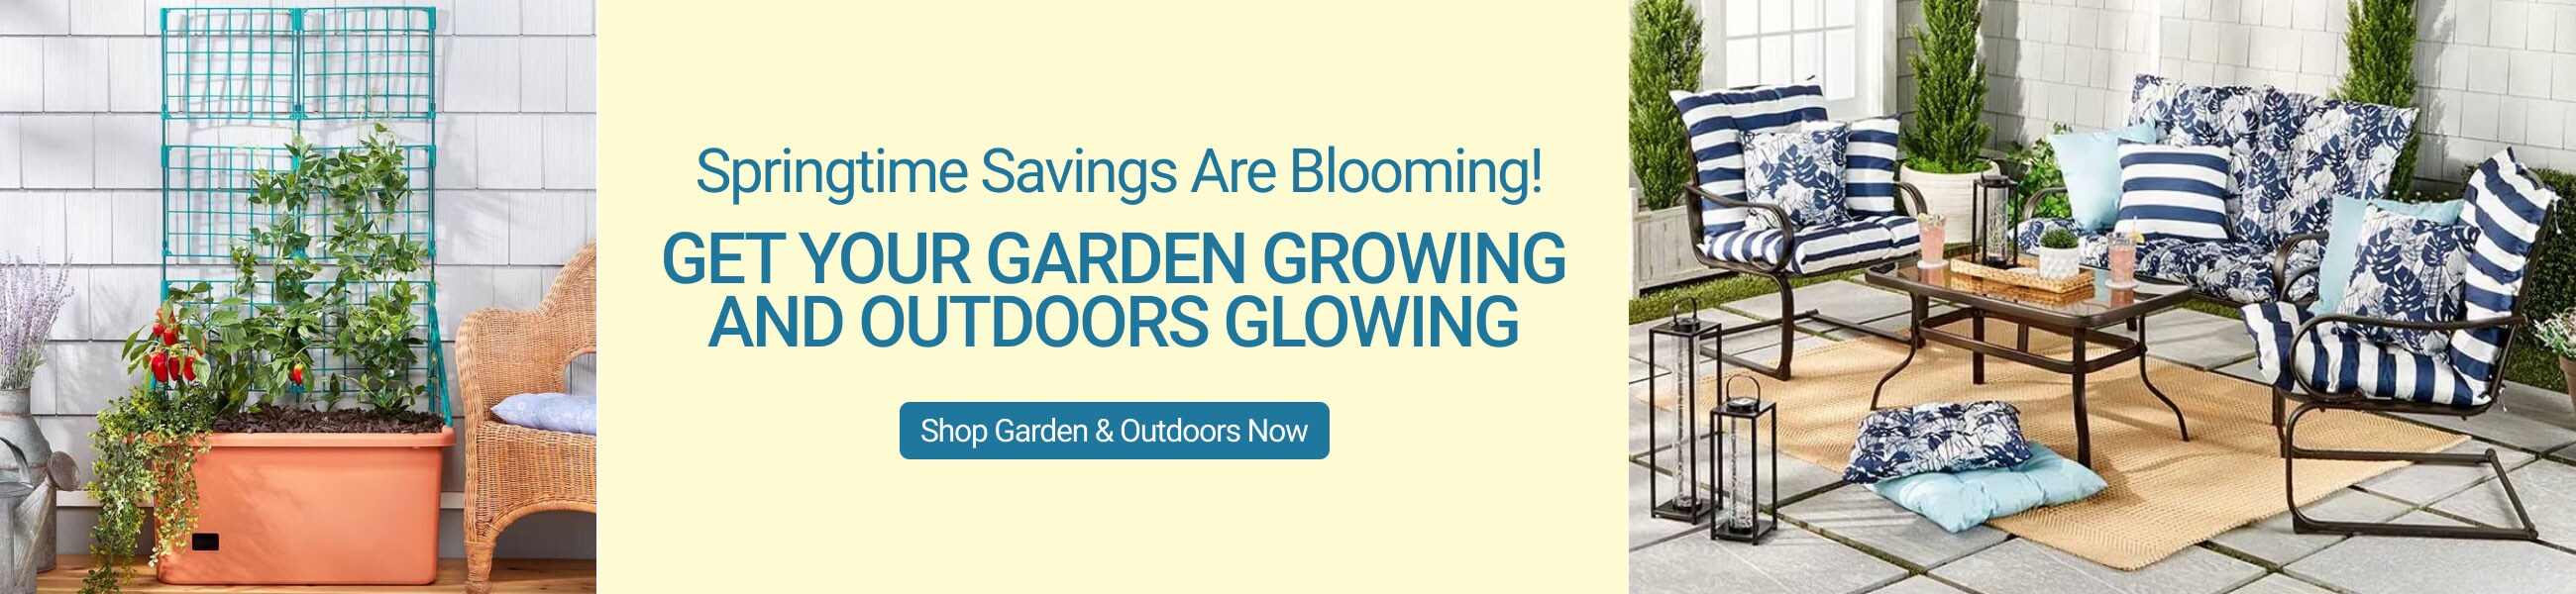 Springtime Savings Are Blooming - Shop Garden & Outdoors Now